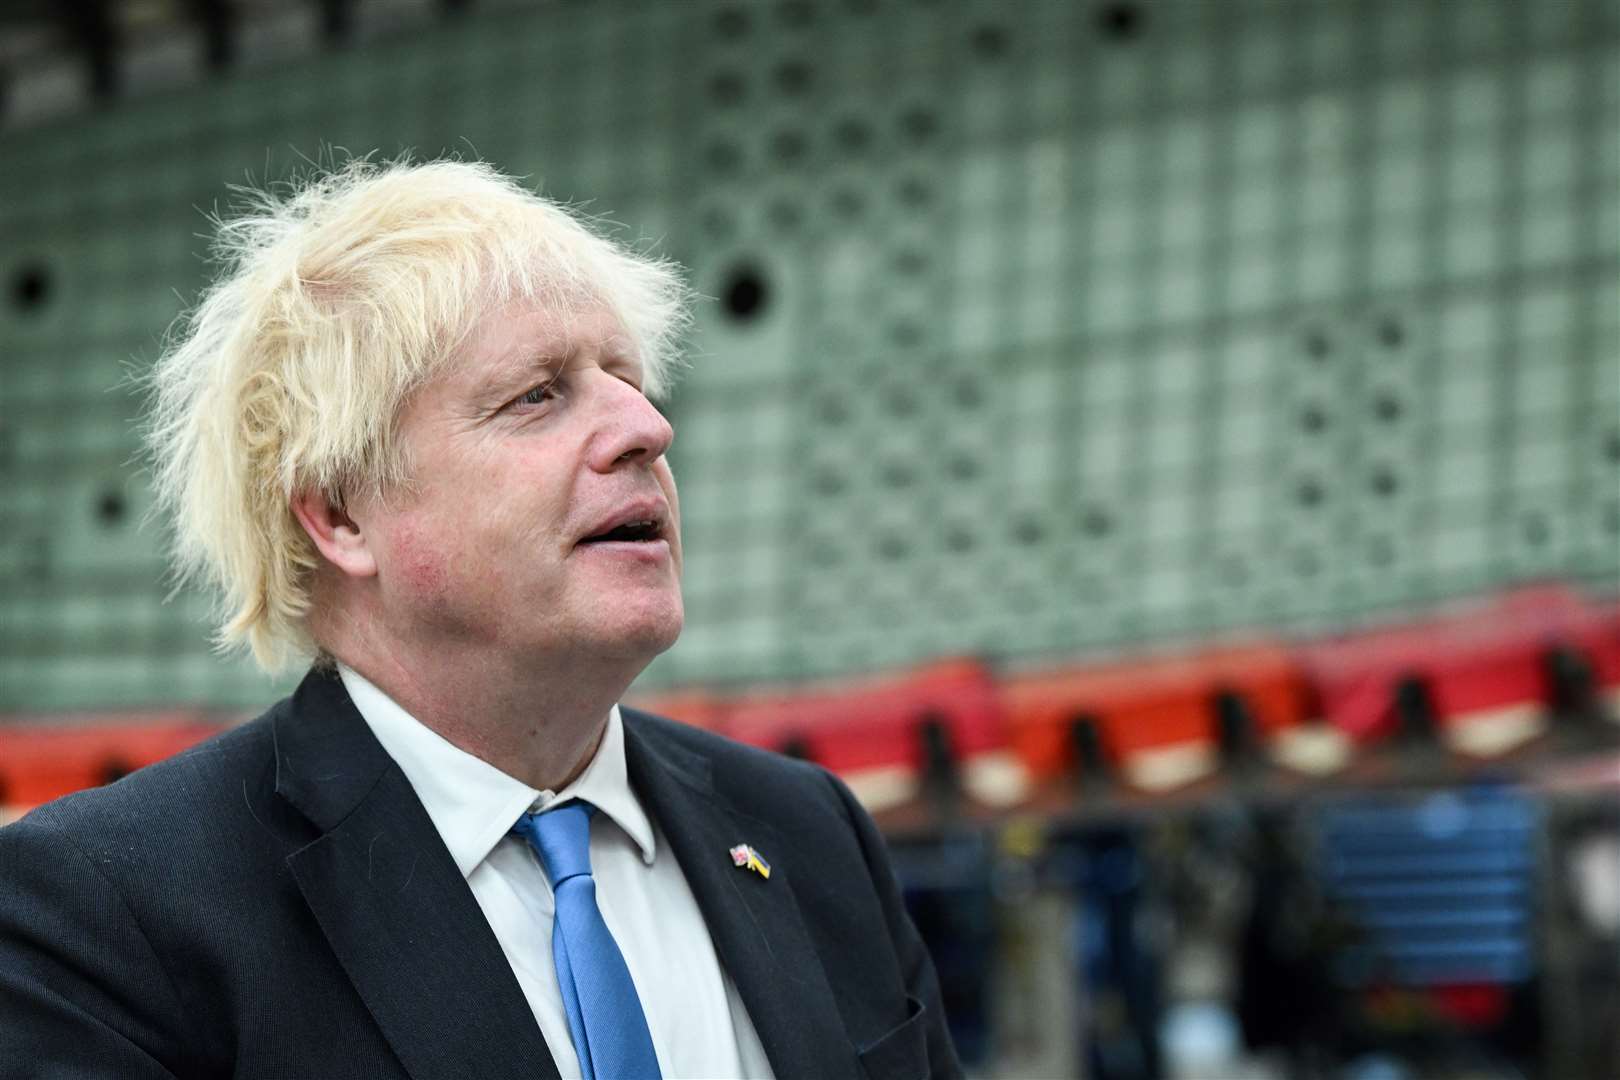 Nicola Sturgeon branded Boris Johnson ‘a disgrace’ at a fringe event in Edinburgh (Oli Scarff/PA)